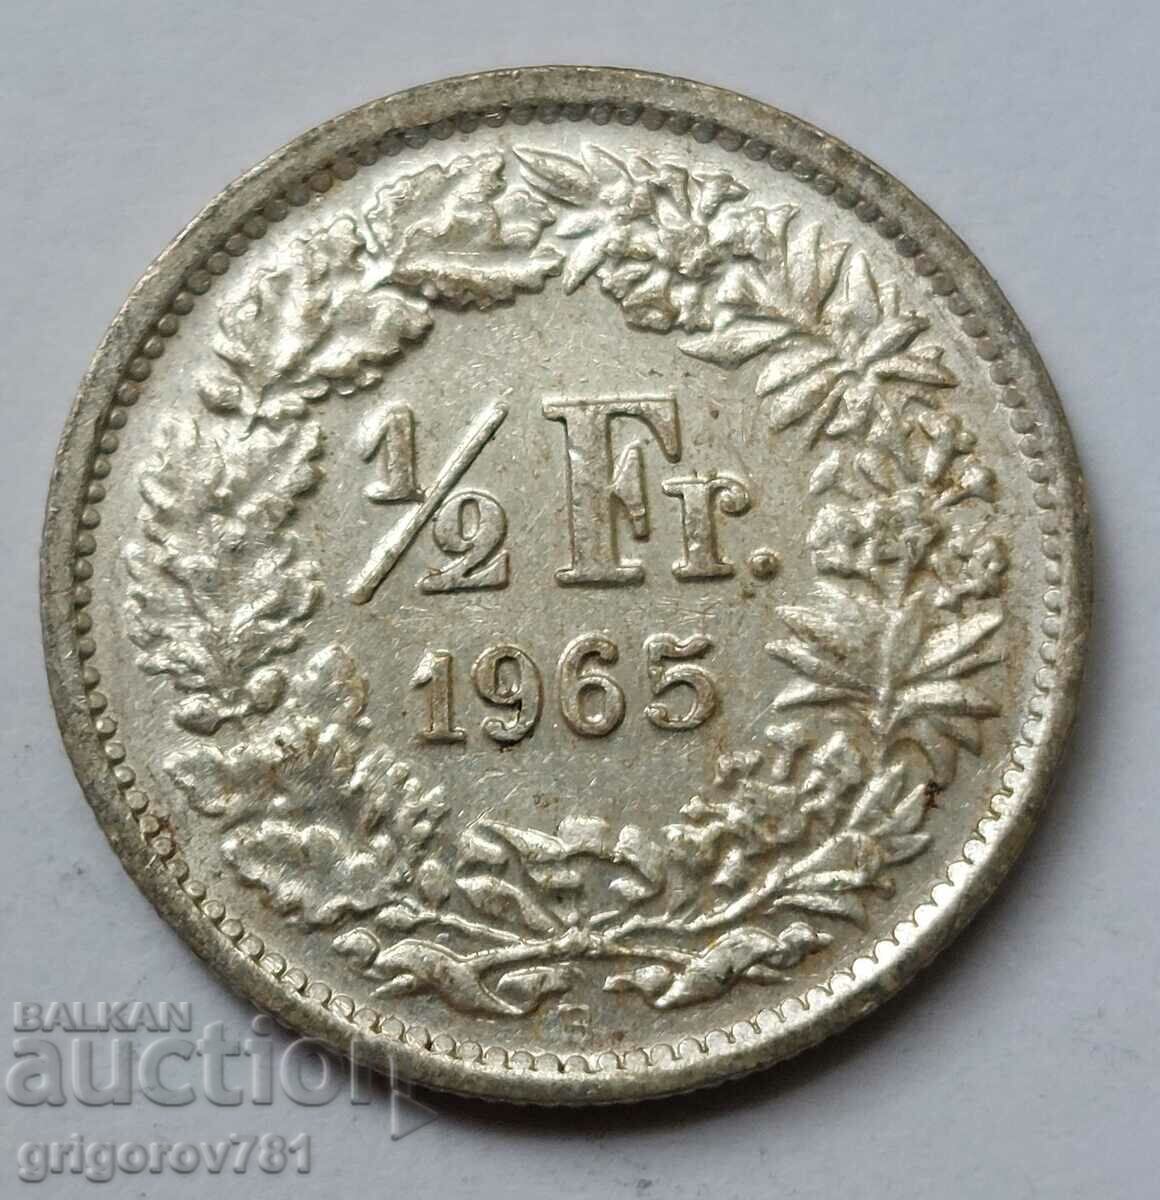 1/2 Franc Argint Elveția 1965 B - Monedă de argint #30